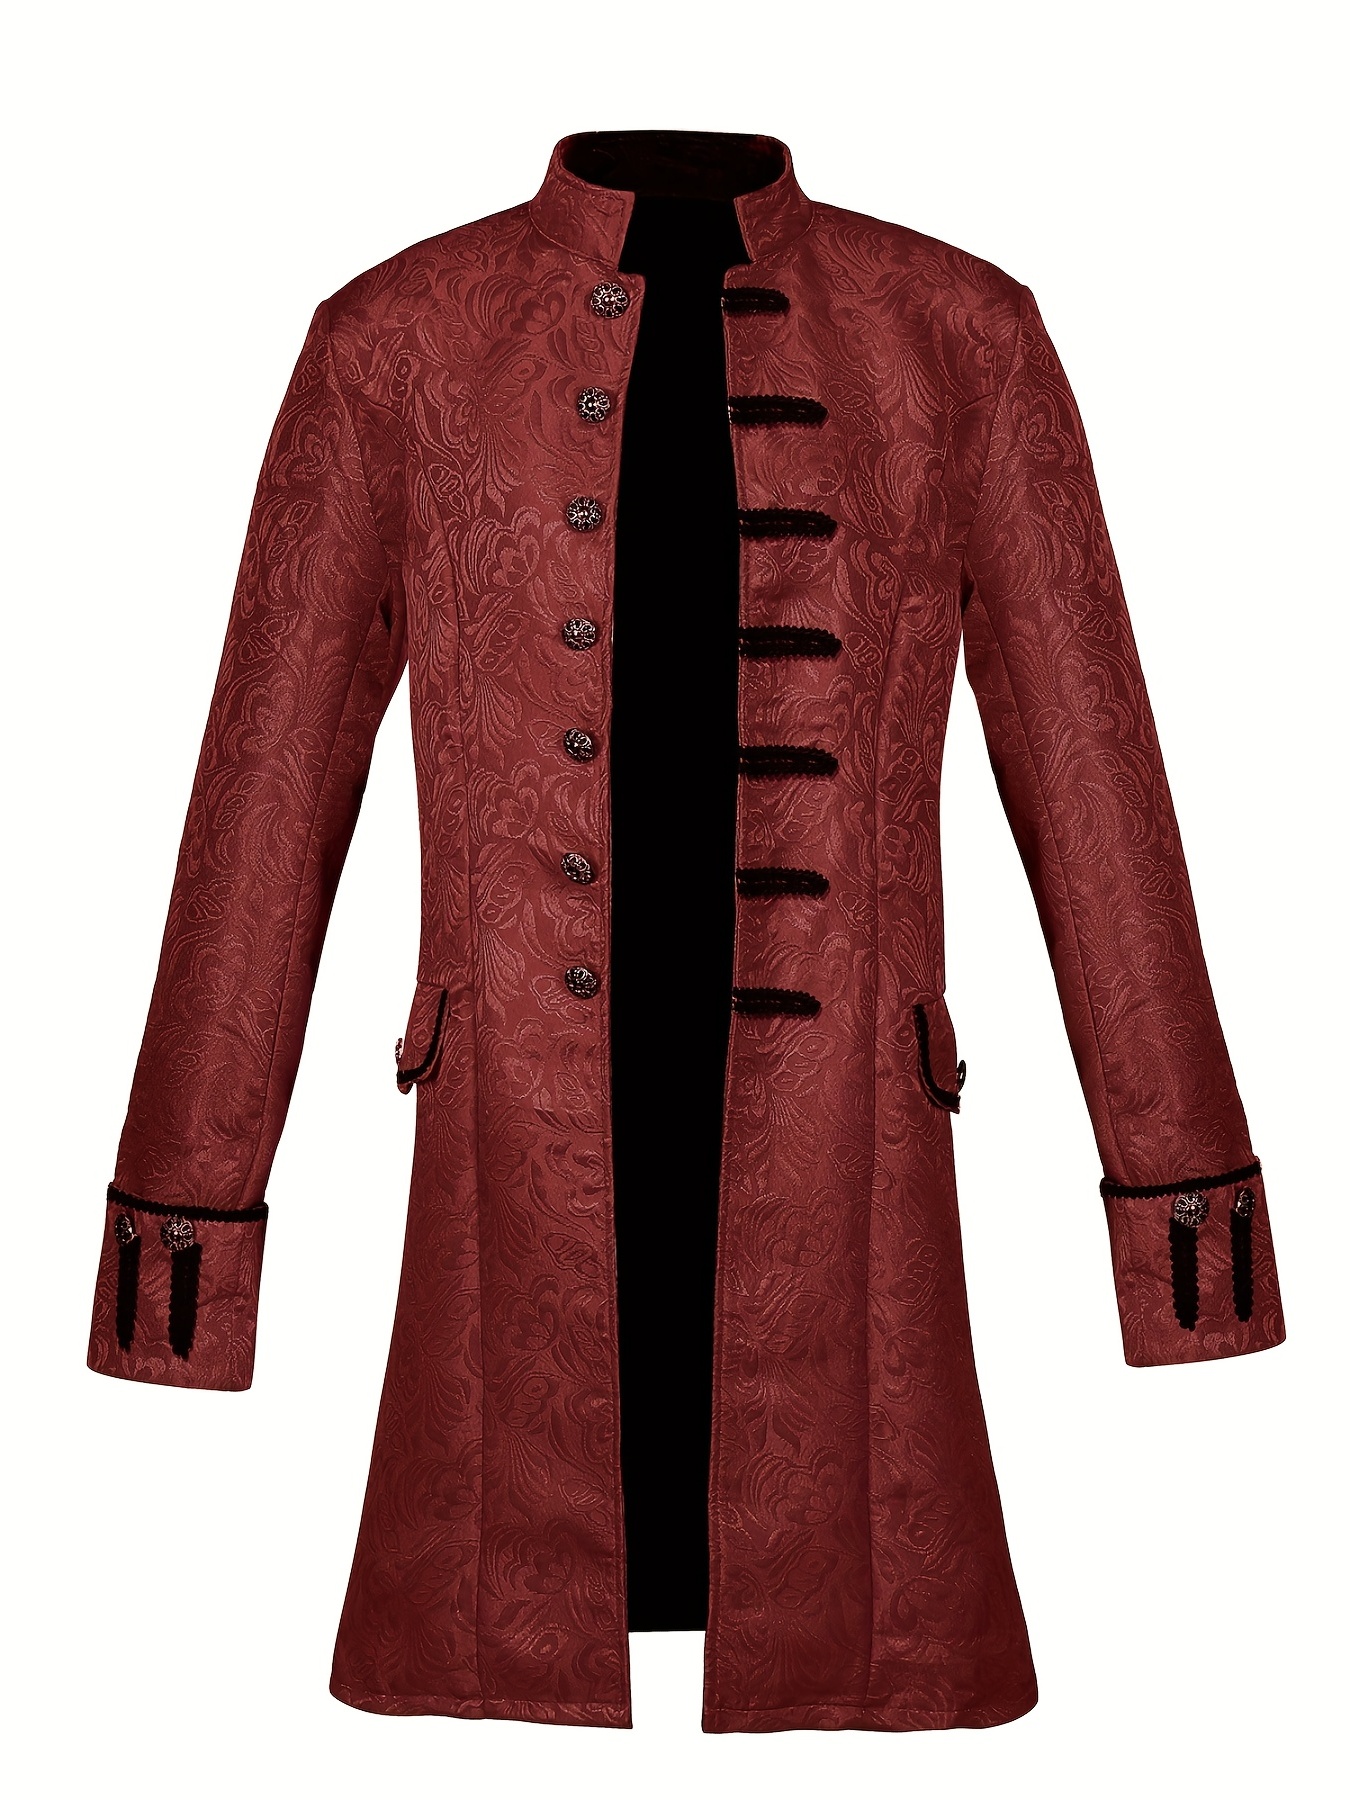 Medieval Steampunk Jacket for Women, Vintage Halloween Costumes